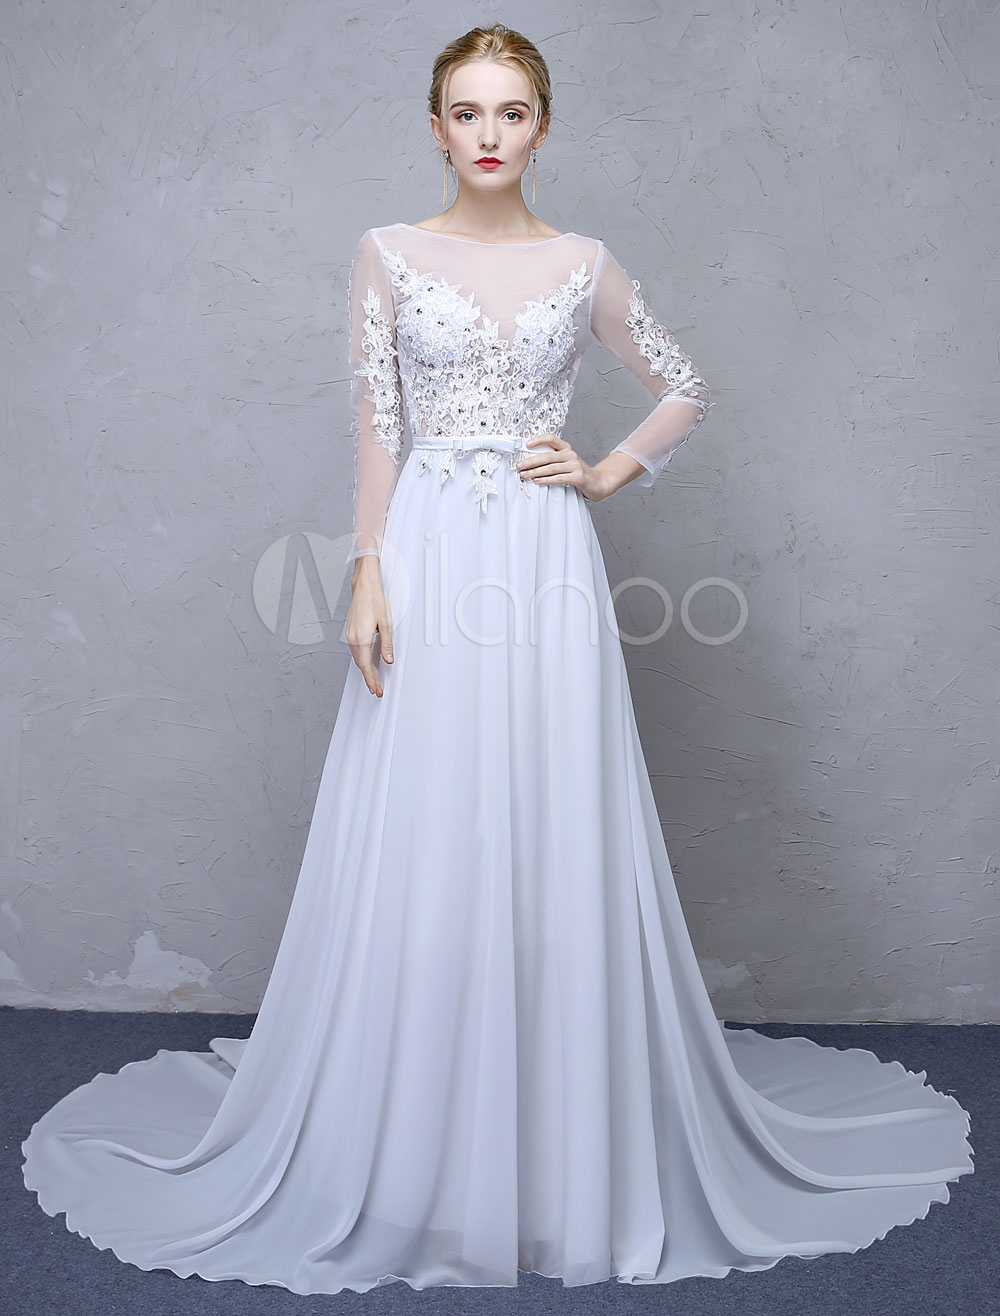 Summer Wedding Dresses 2018 White Lace Long Sleeve Backless Beaded ...